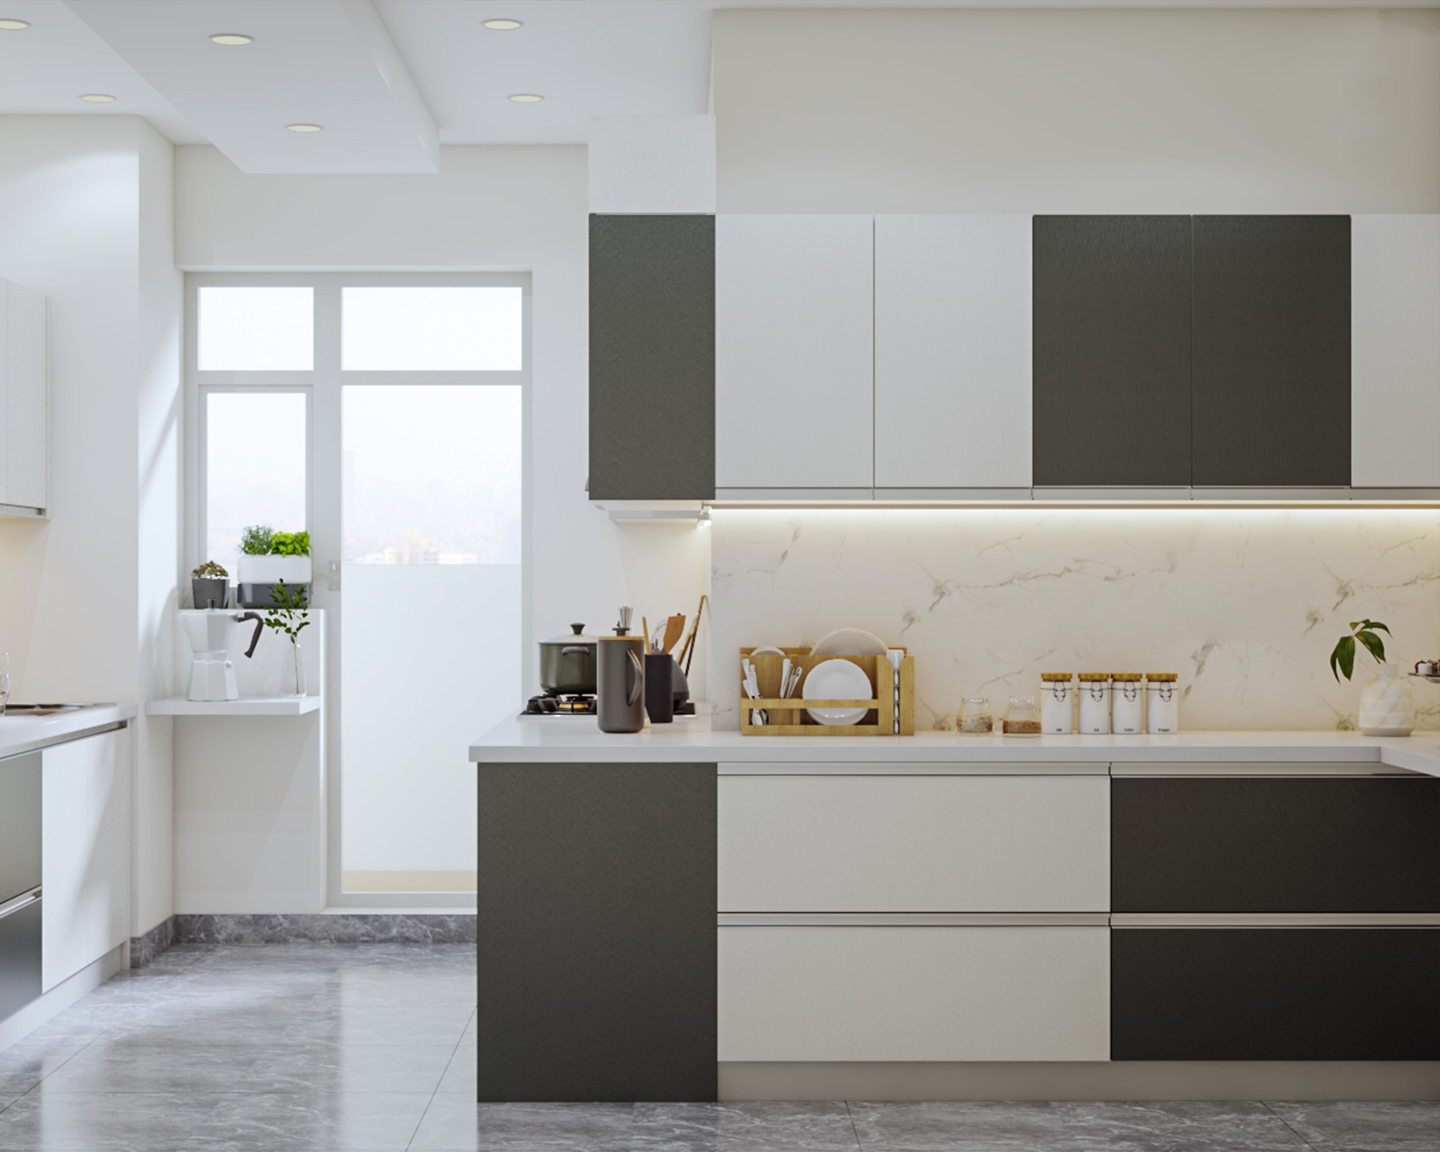 Modern Style Spacious Modular Kitchen Design In Grey And White